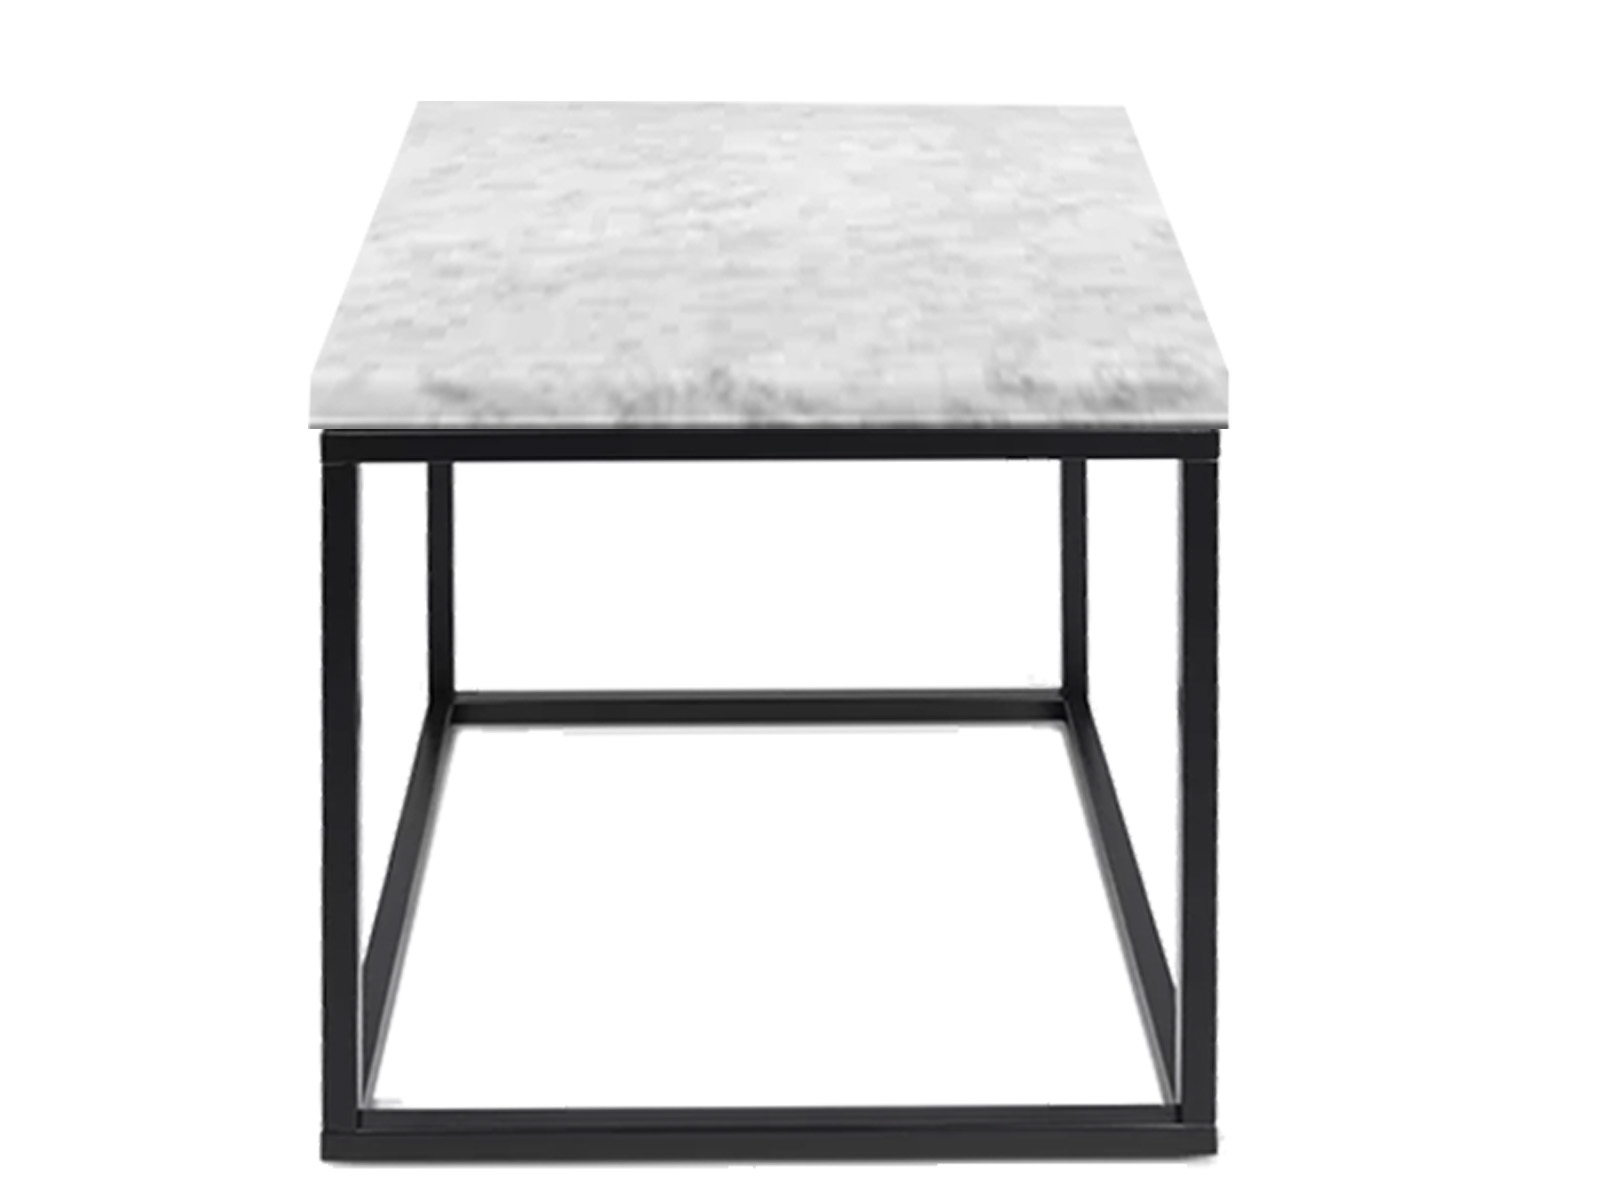 Prairie End Table // Black Steel base with White Carrara top - Image 0